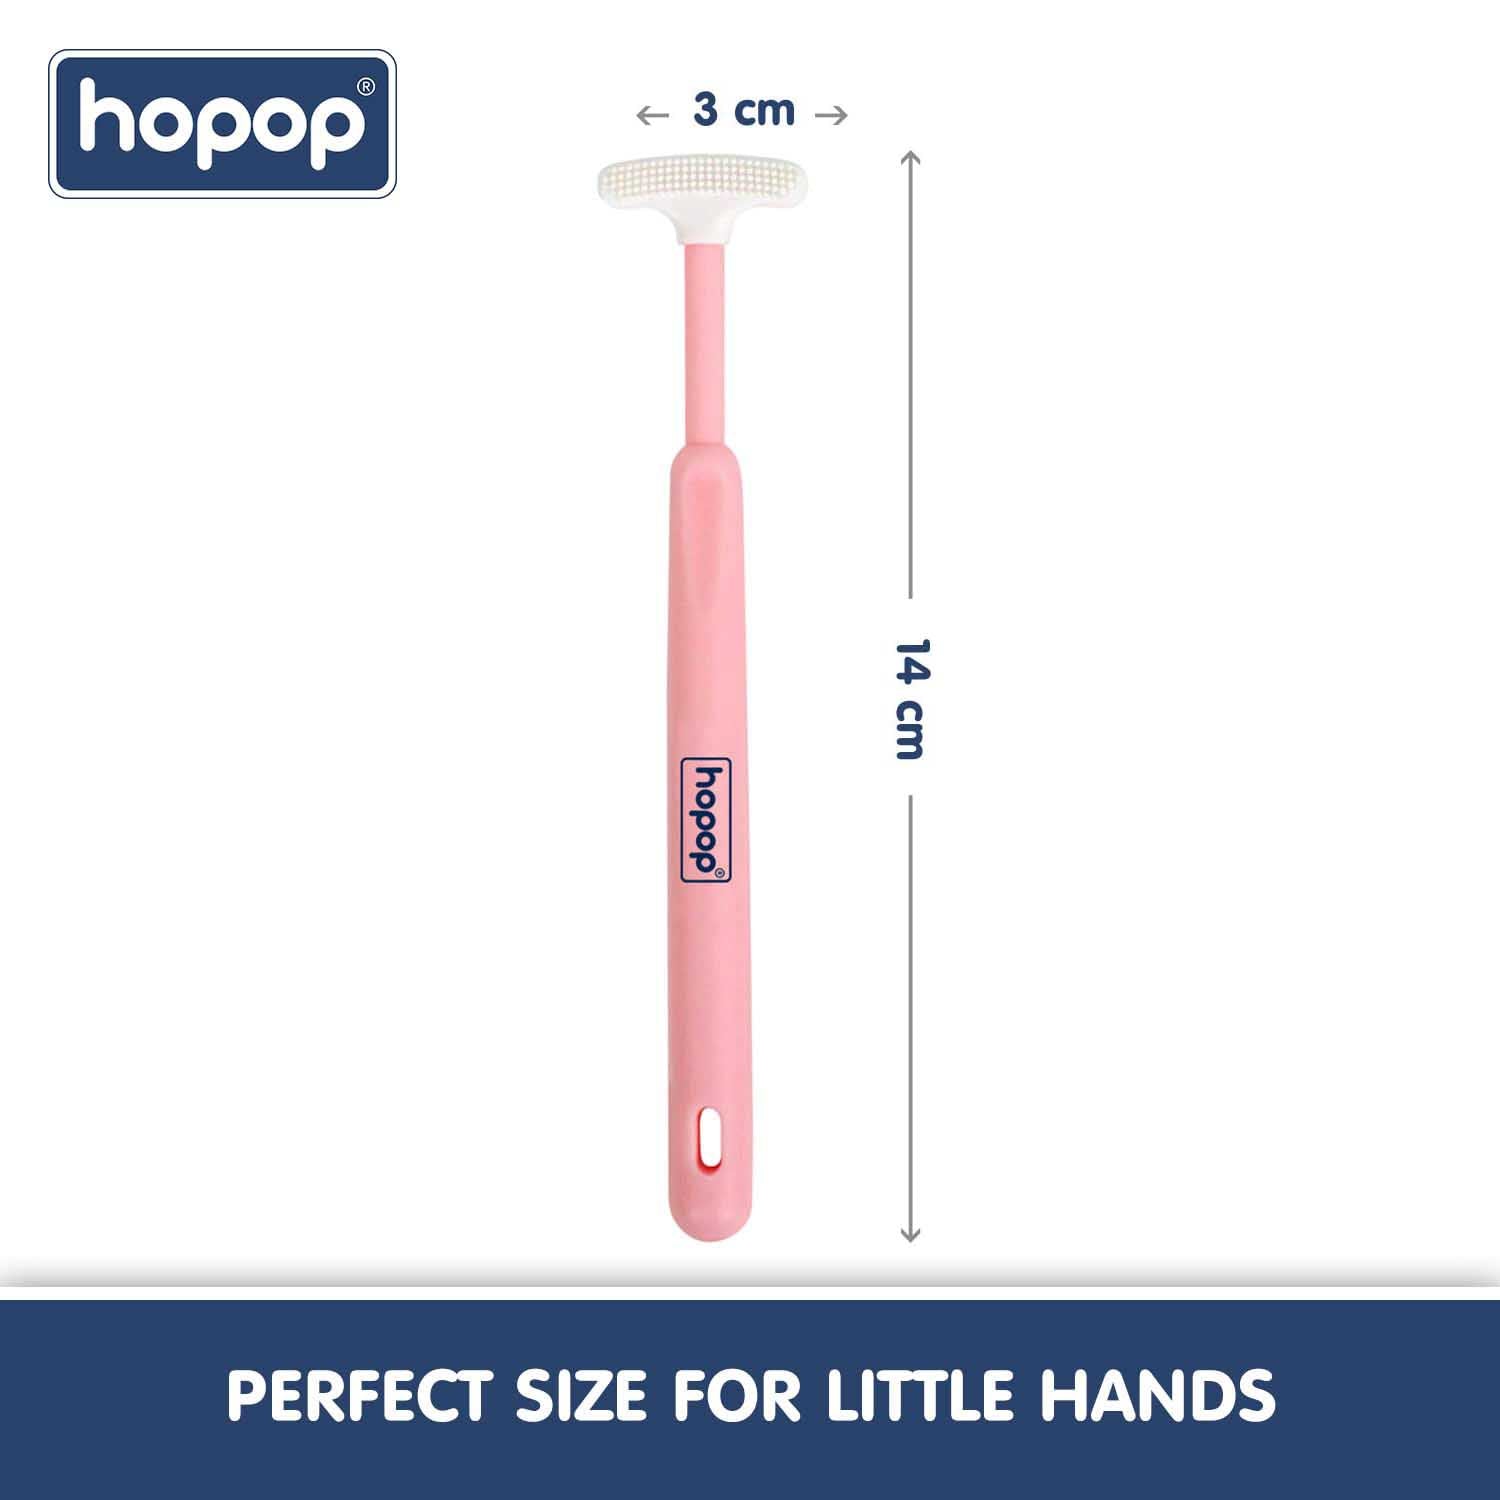 Hopop Soft & Gentle Tender Tongue Cleaner For Babies - Pink 6m+